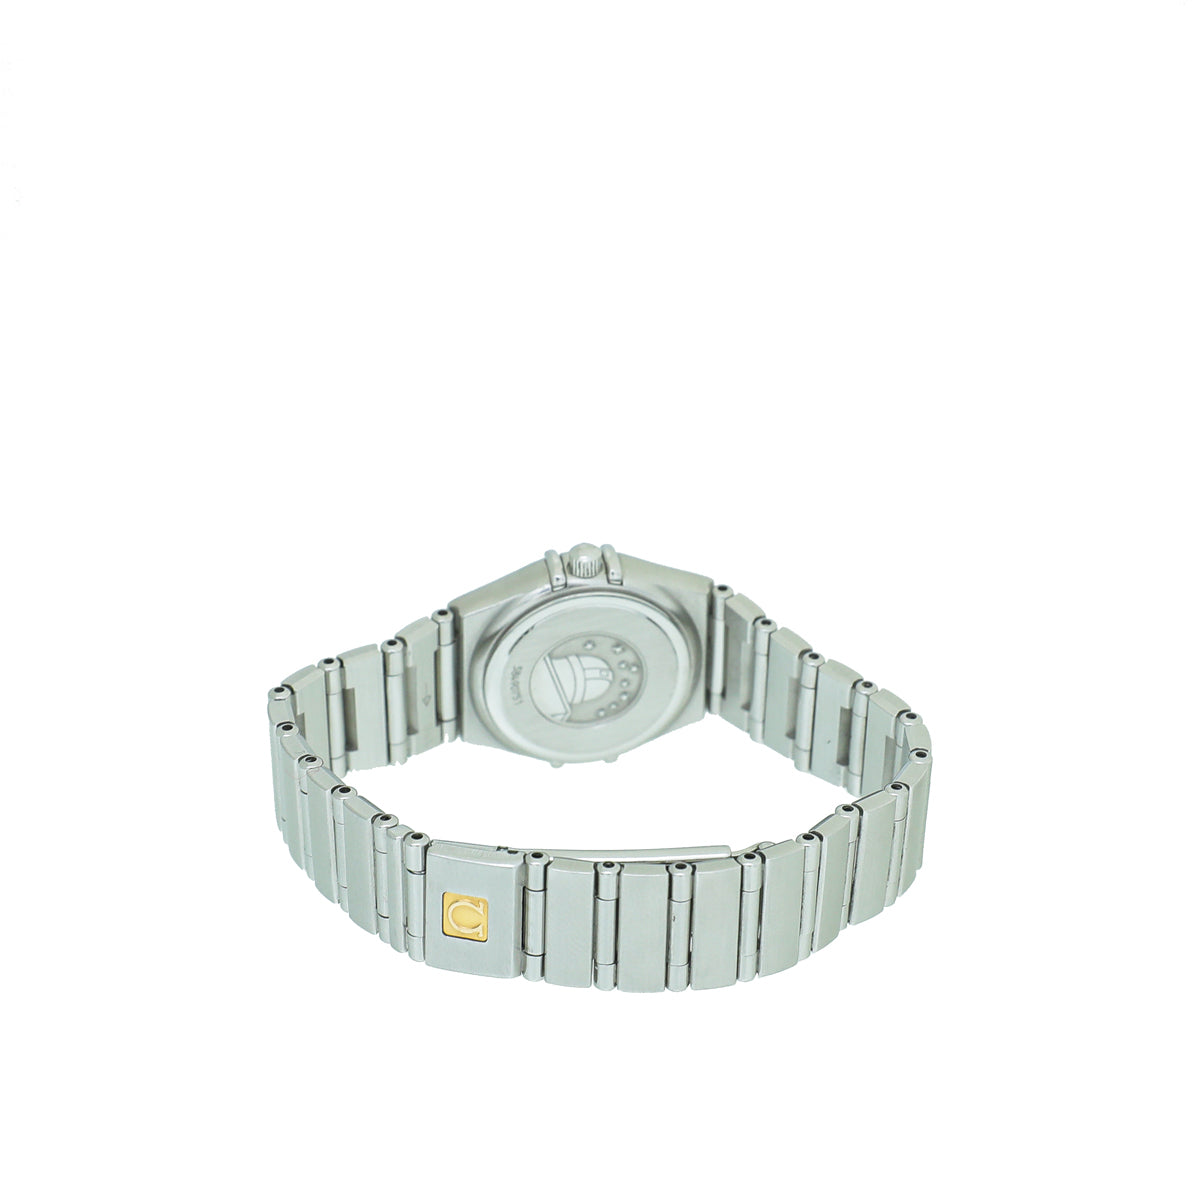 Omega ST.ST Diamond Constellation 24mm Watch